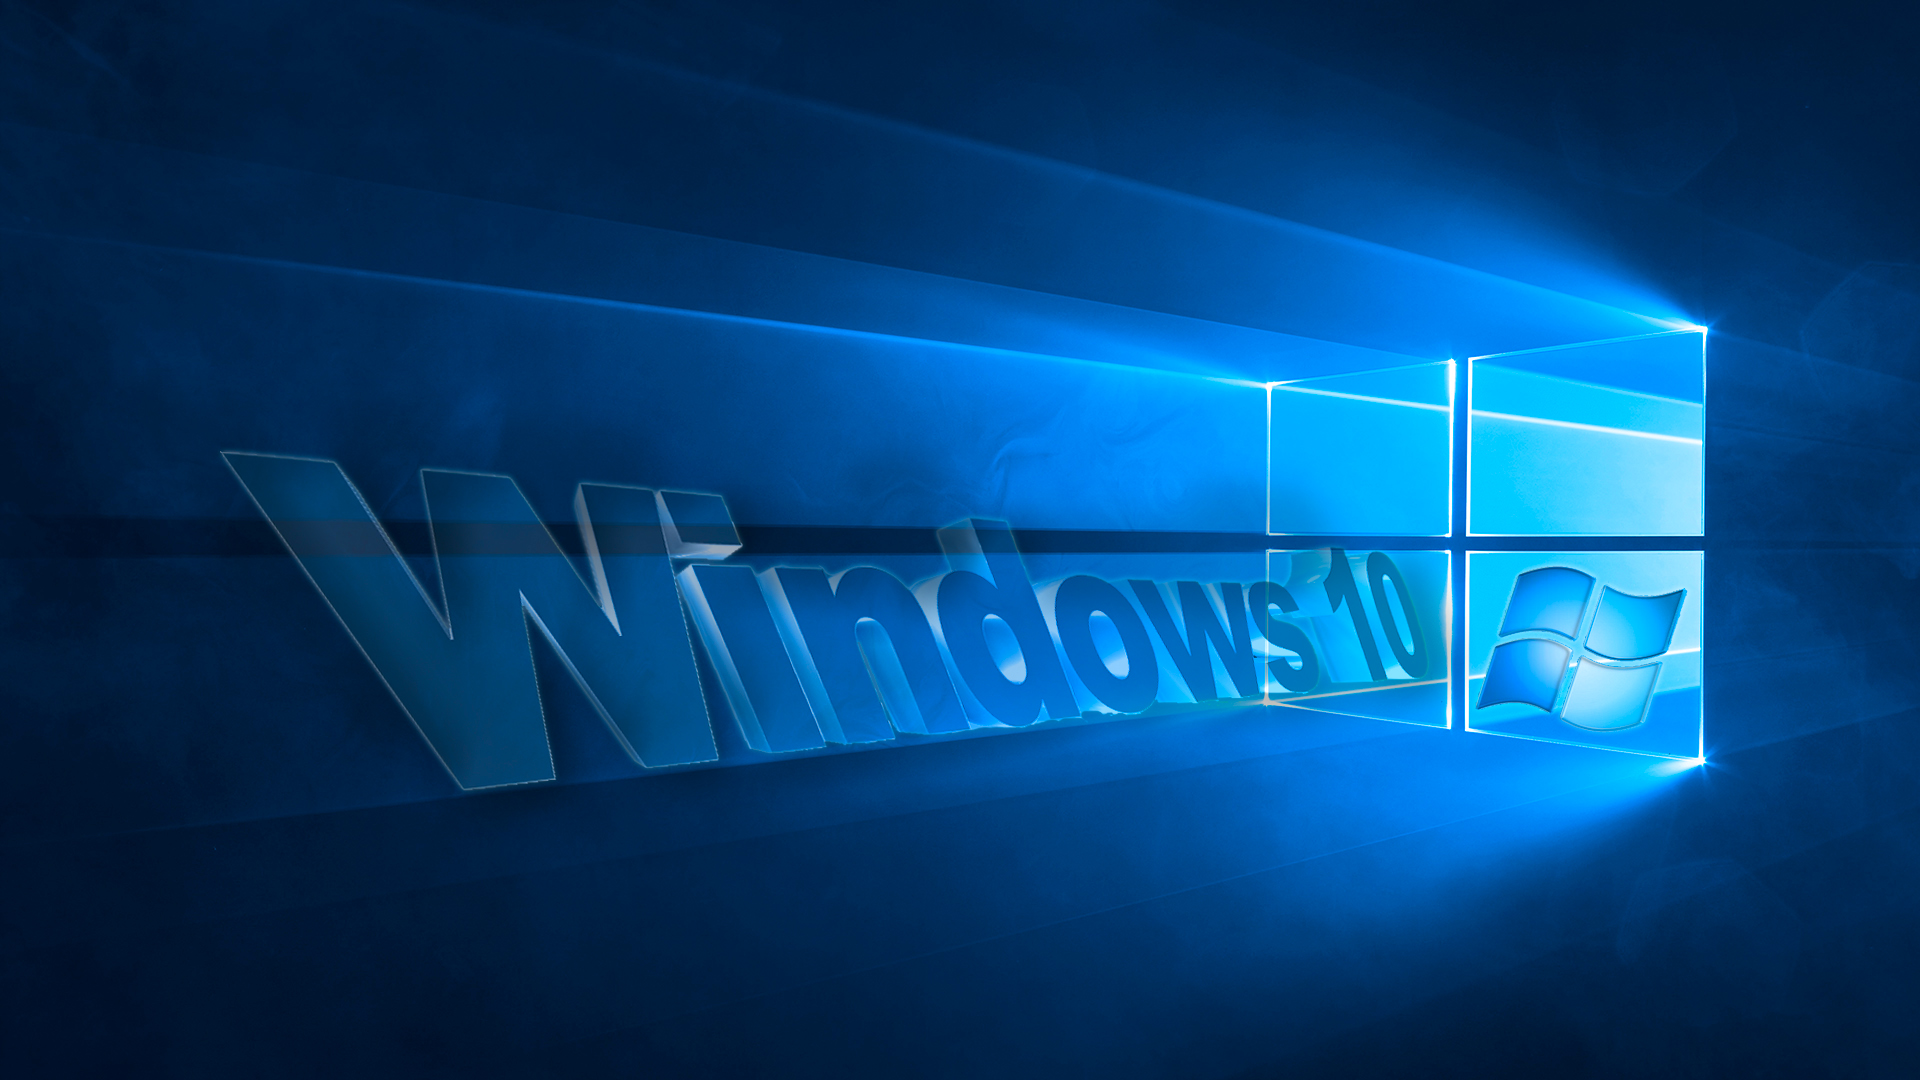 Windows 10 Pro Wallpaper - Windows 10 HD Wallpapers (74+ images